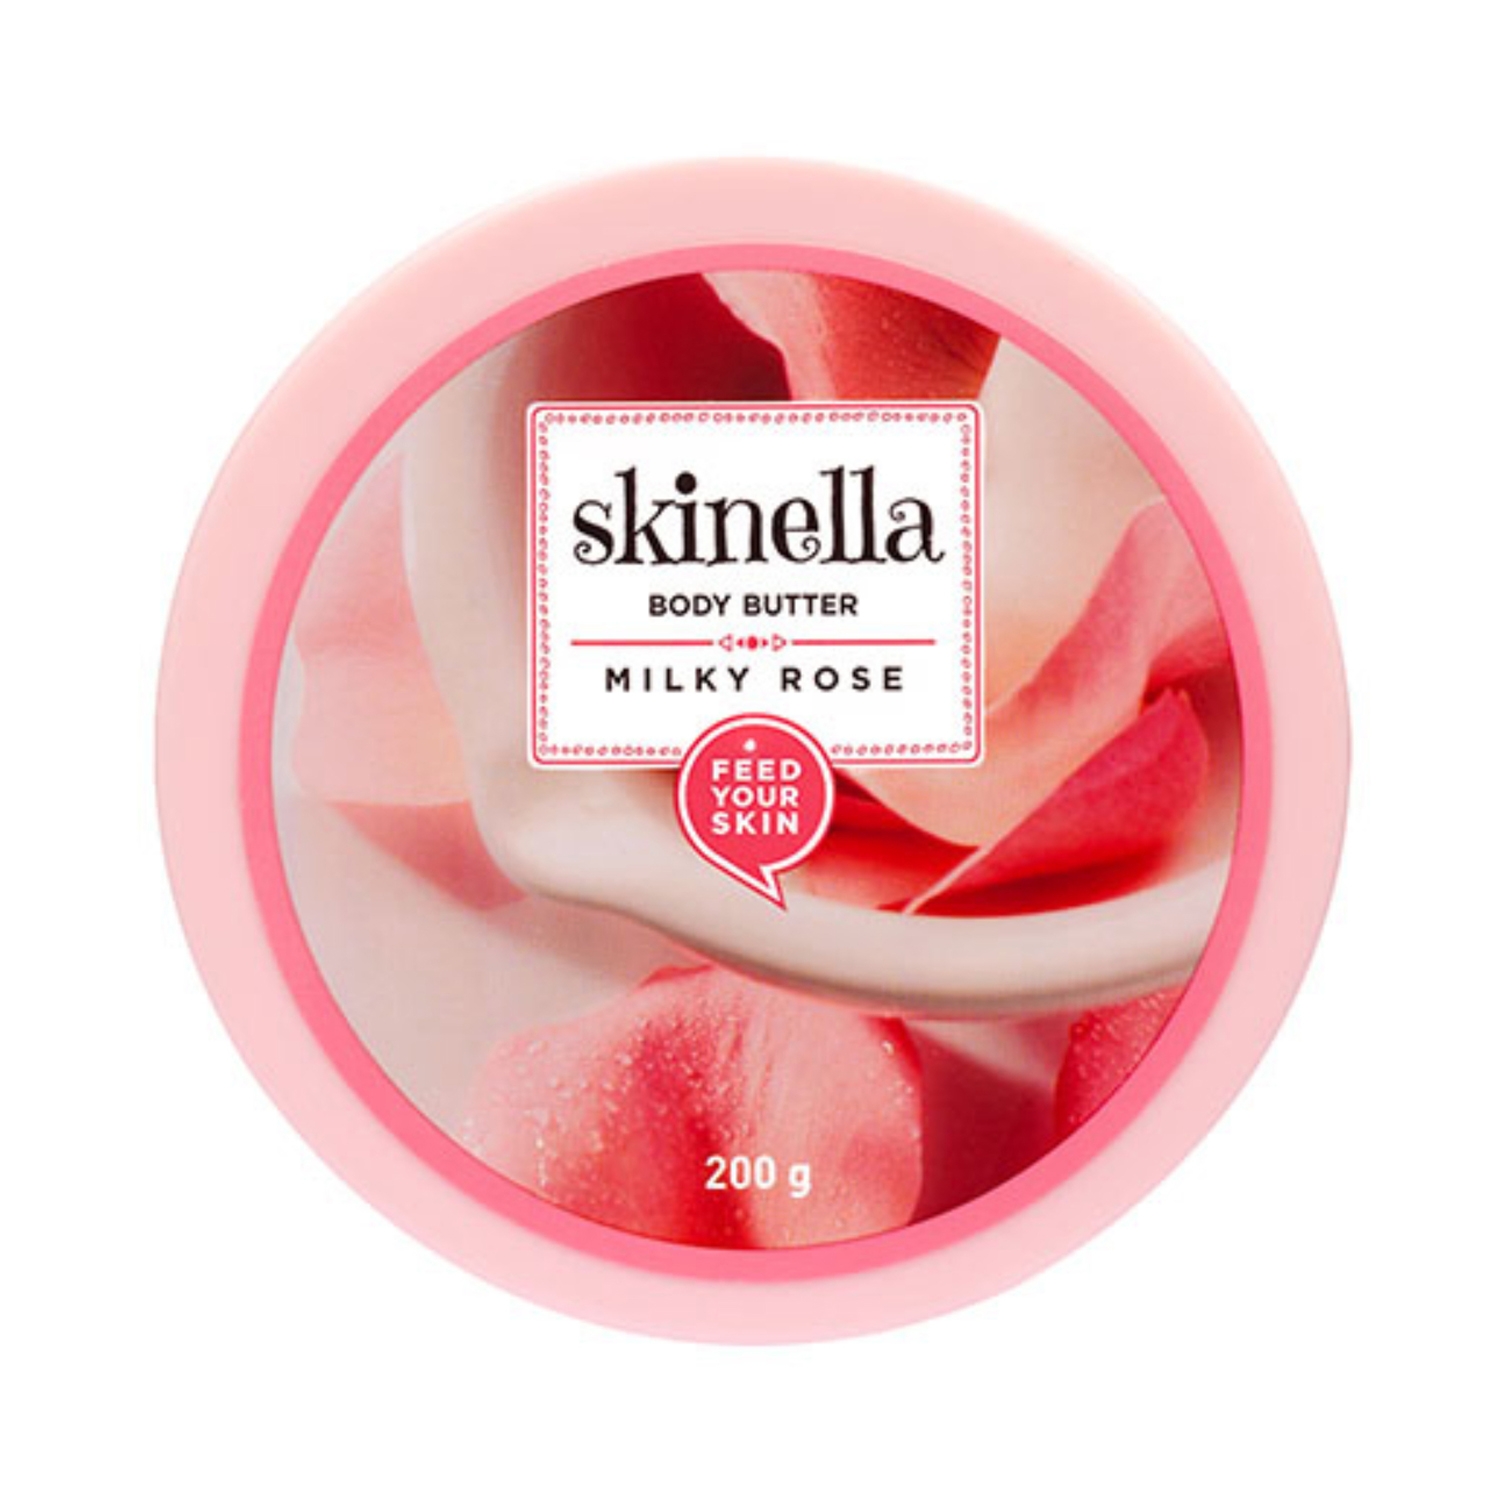 Skinella | Skinella Body Butter - Milky Rose (200g)